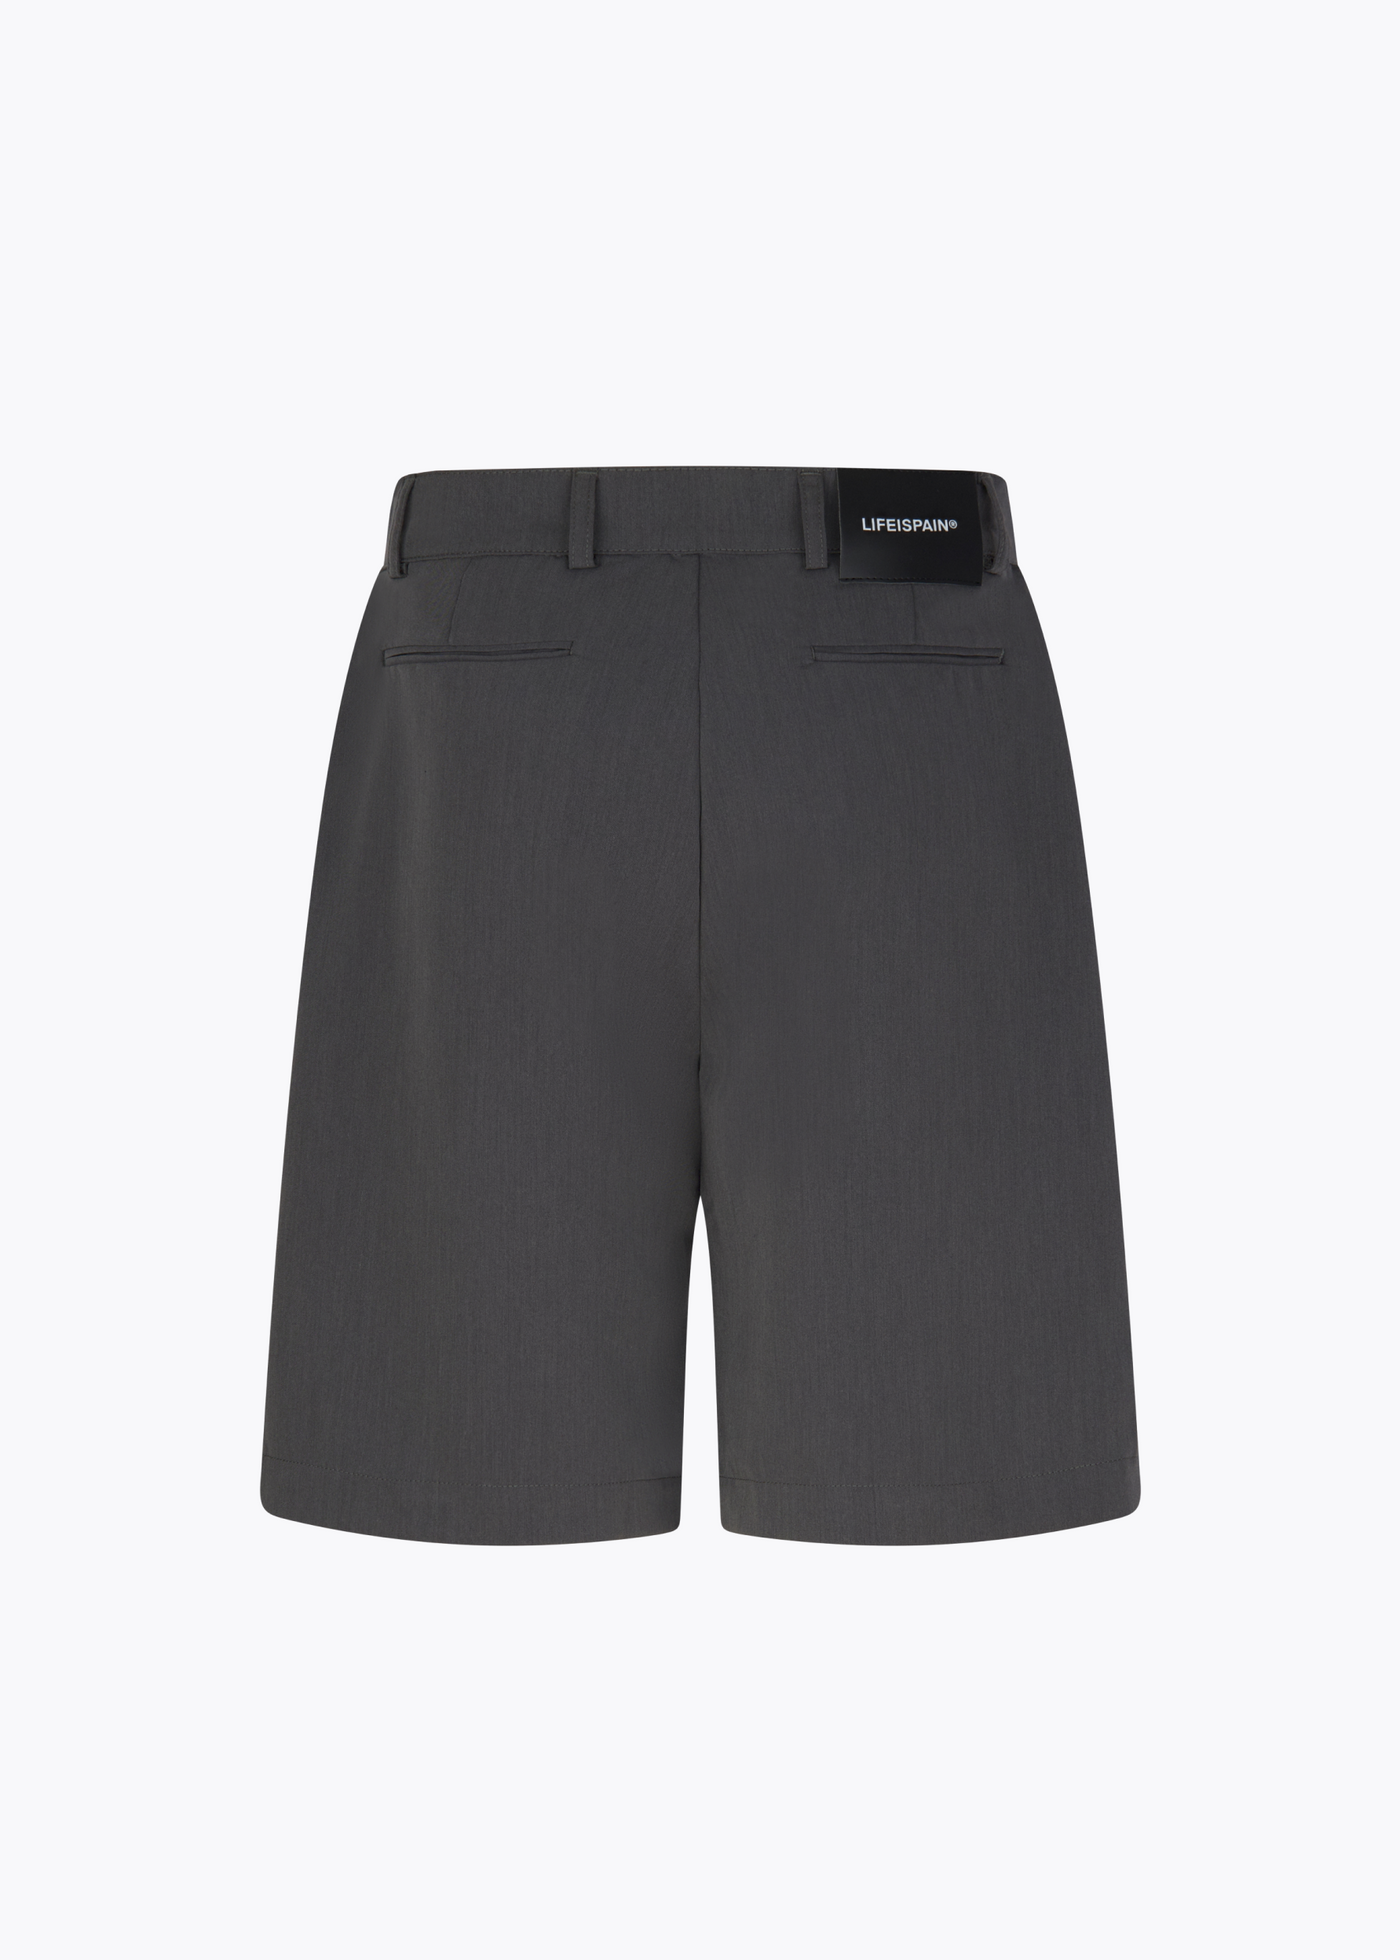 Graue weite Anzugs-shorts